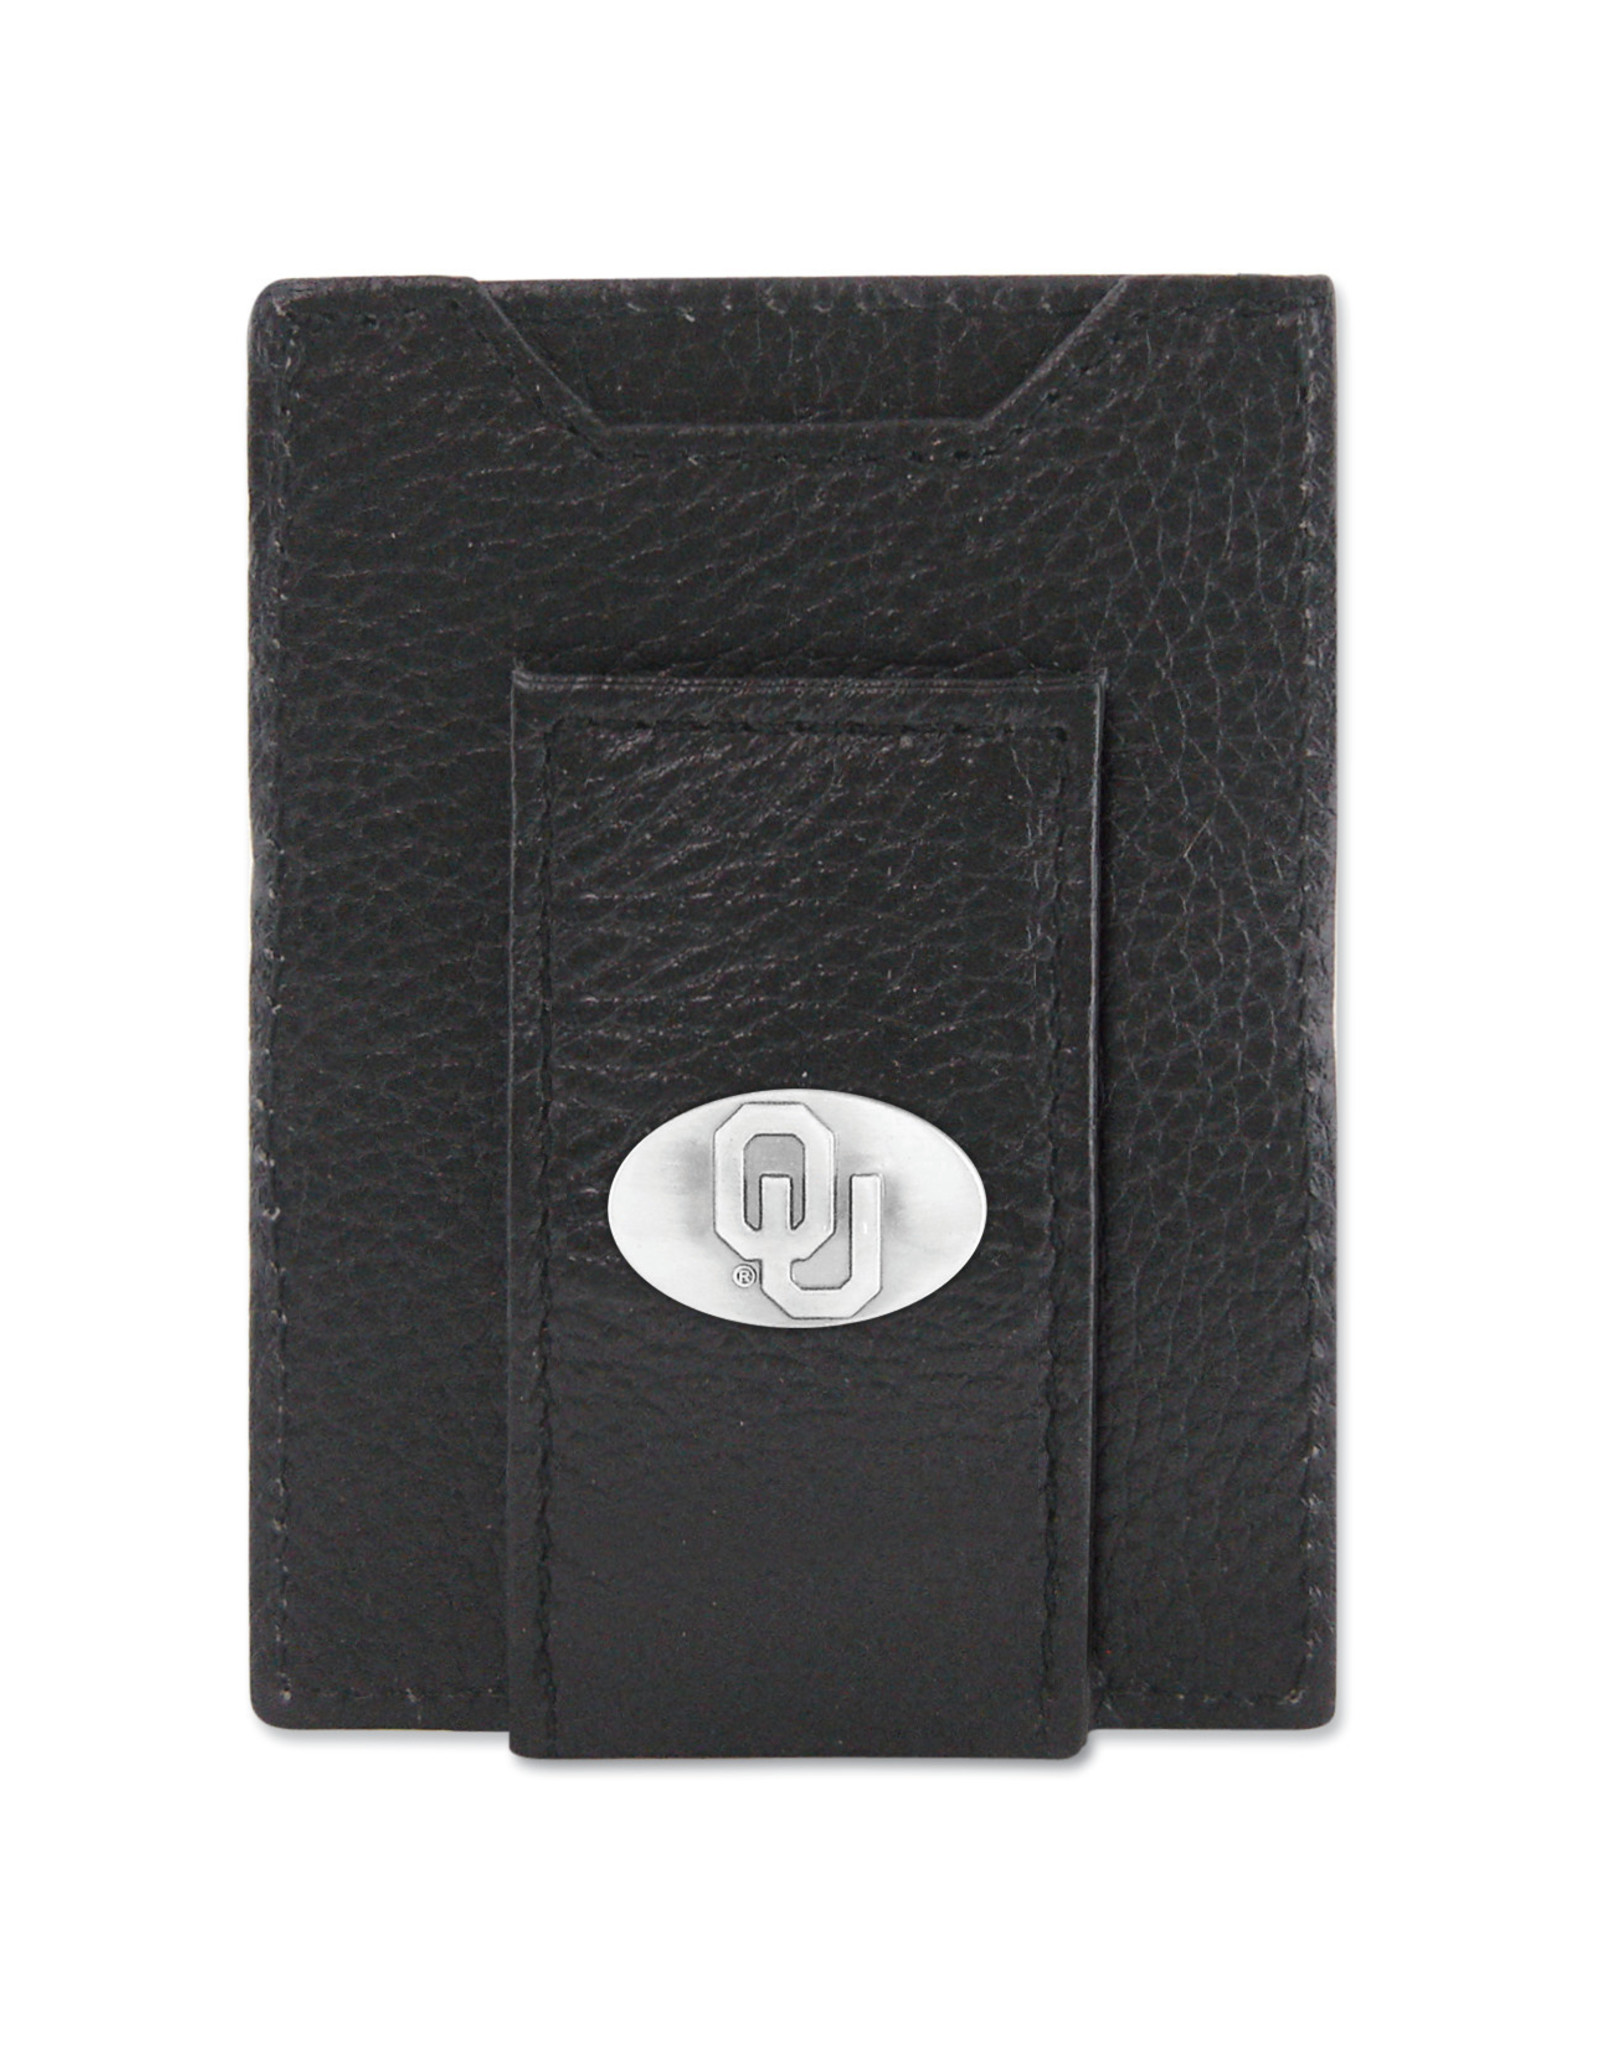 Zep-Pro Zep-Pro Black Pebble Grain Front Pocket Wallet